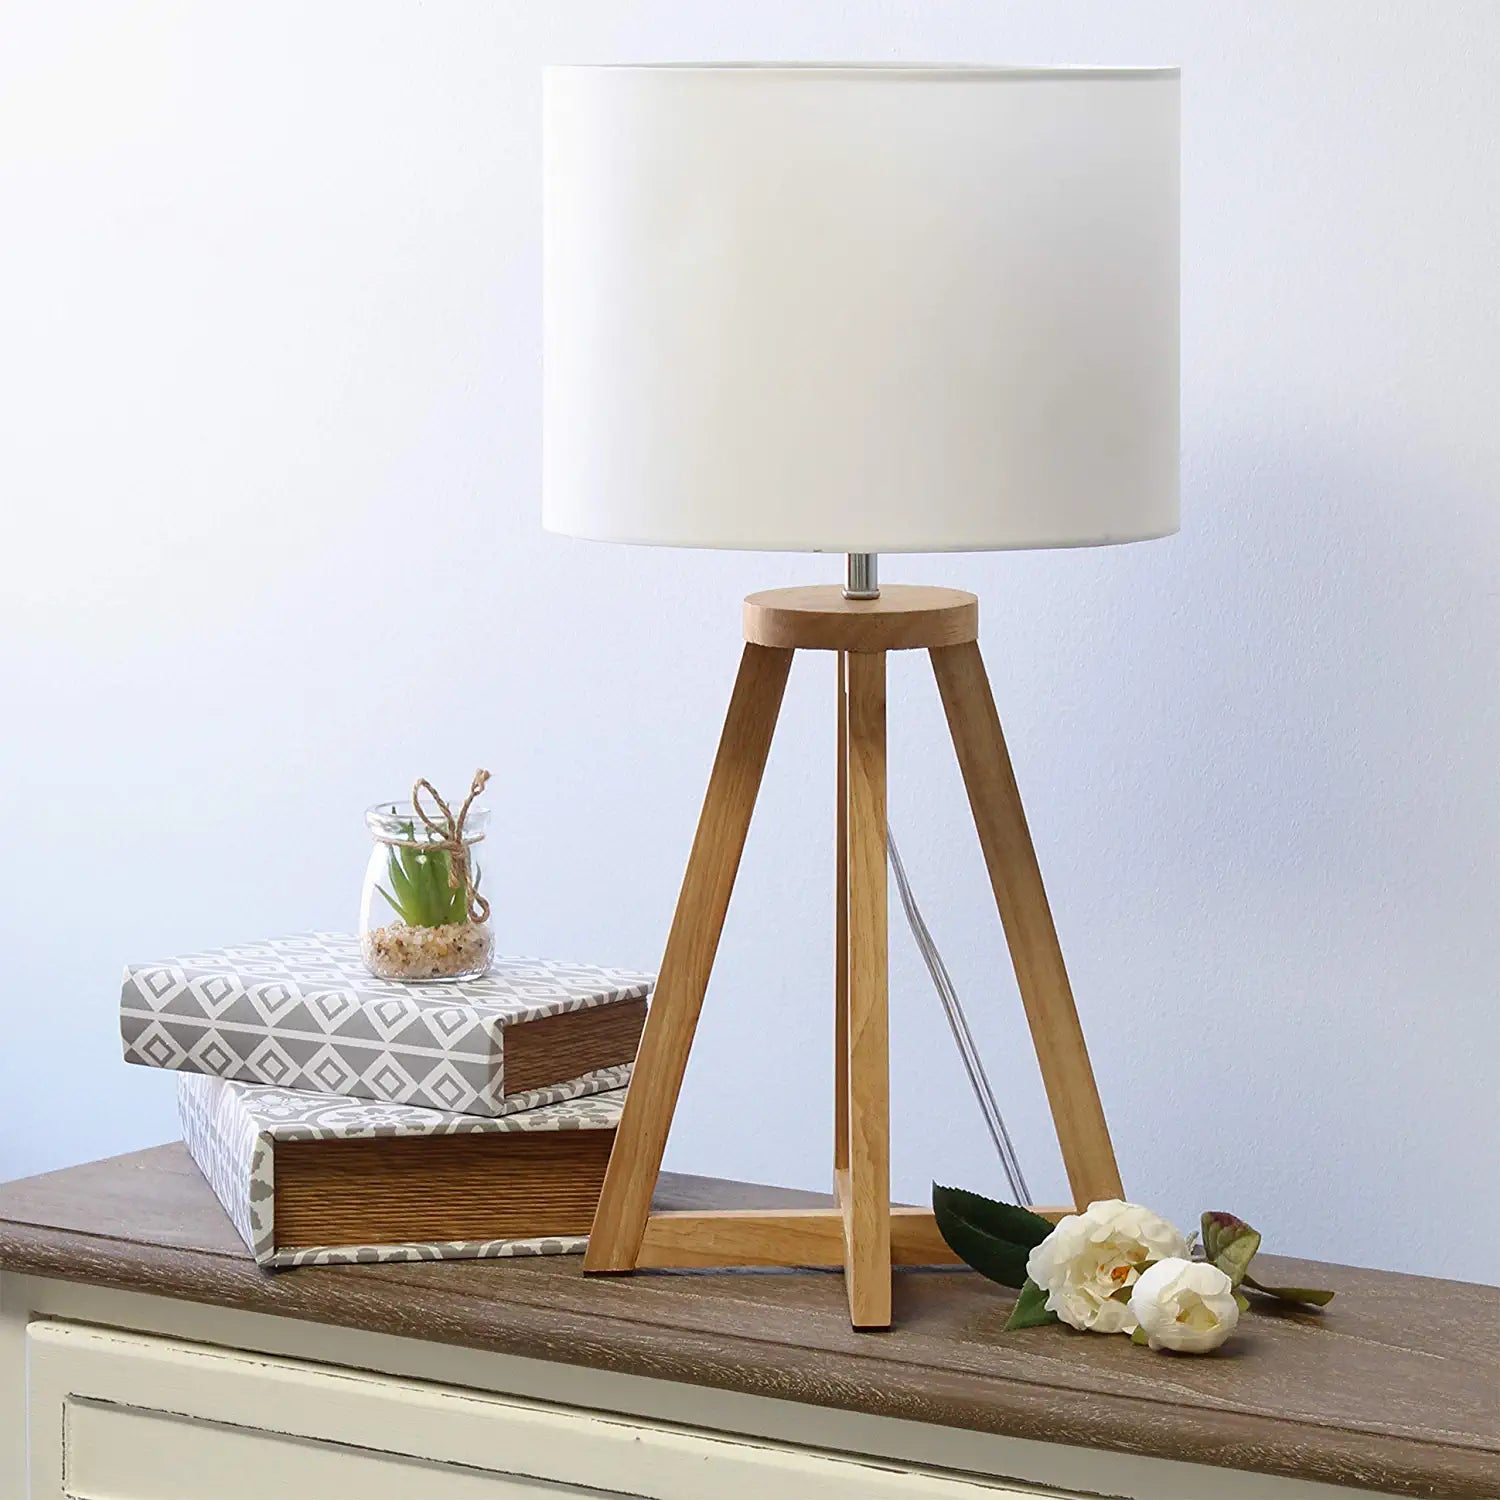 Simple Designs LT1069-NWH Interlocked Triangular Wood Fabric Shade Table Lamp, Natural/White